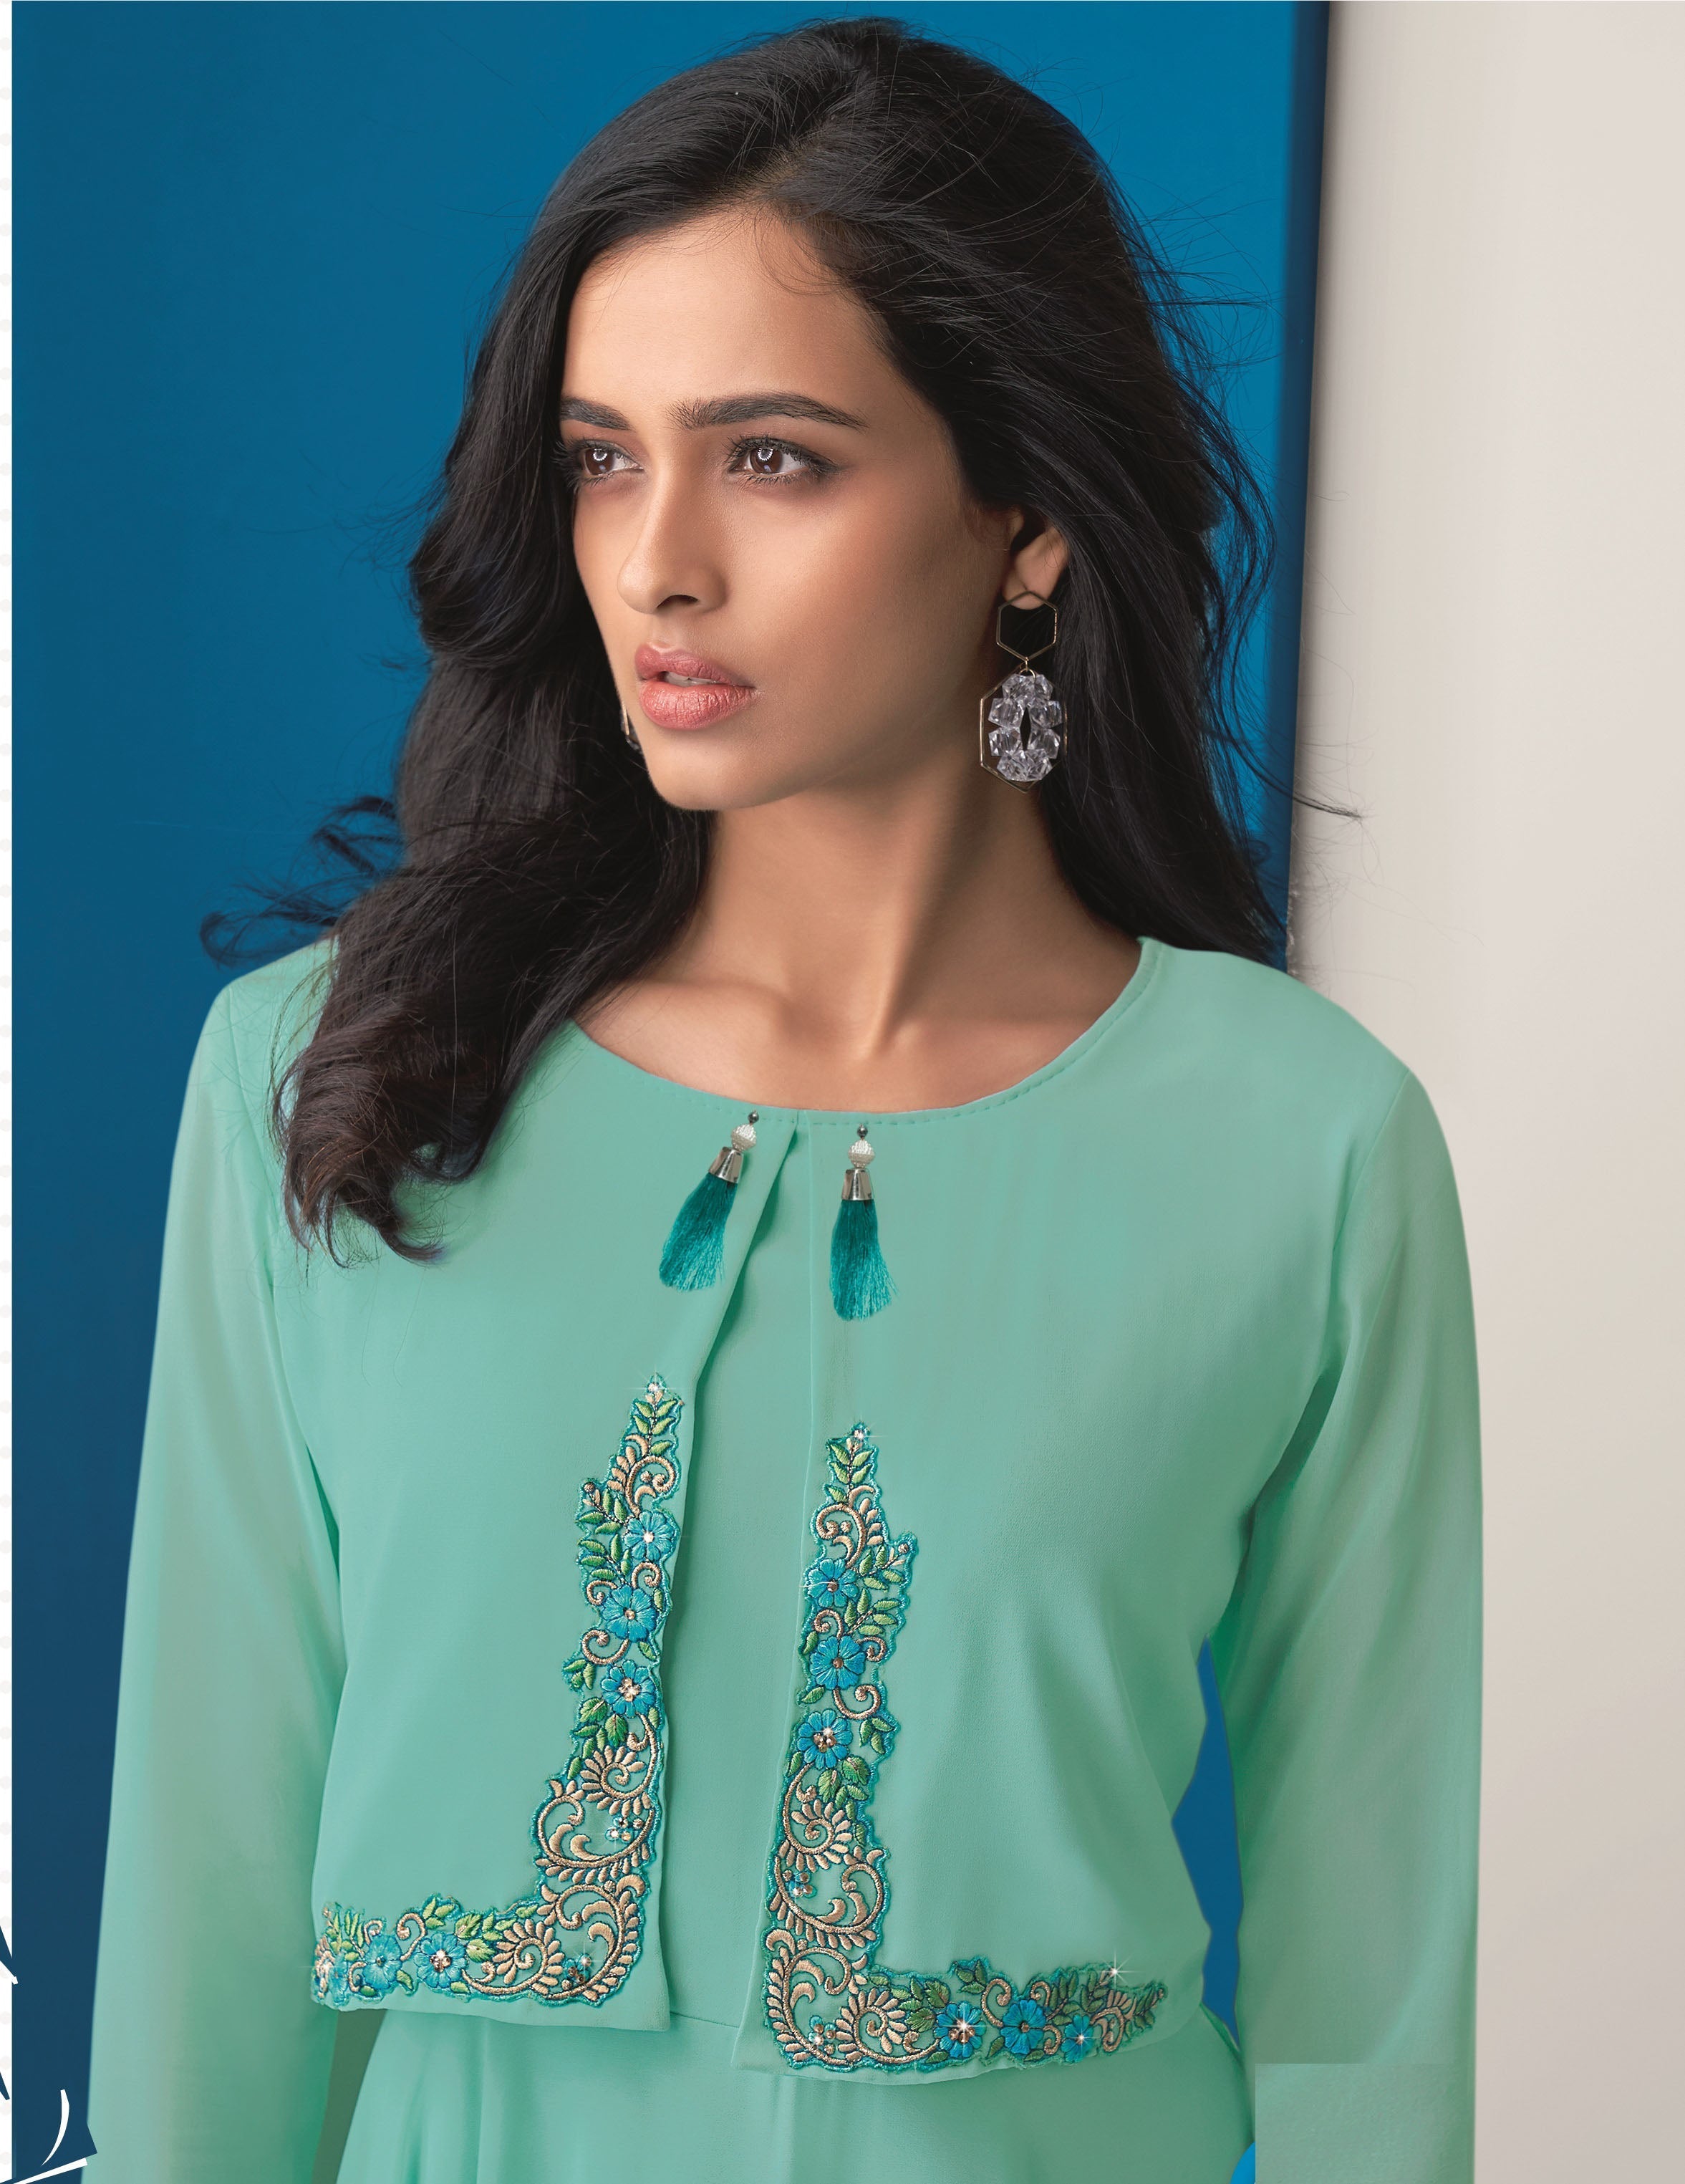 Aqua Green Color Thread Work Anarkali Gown